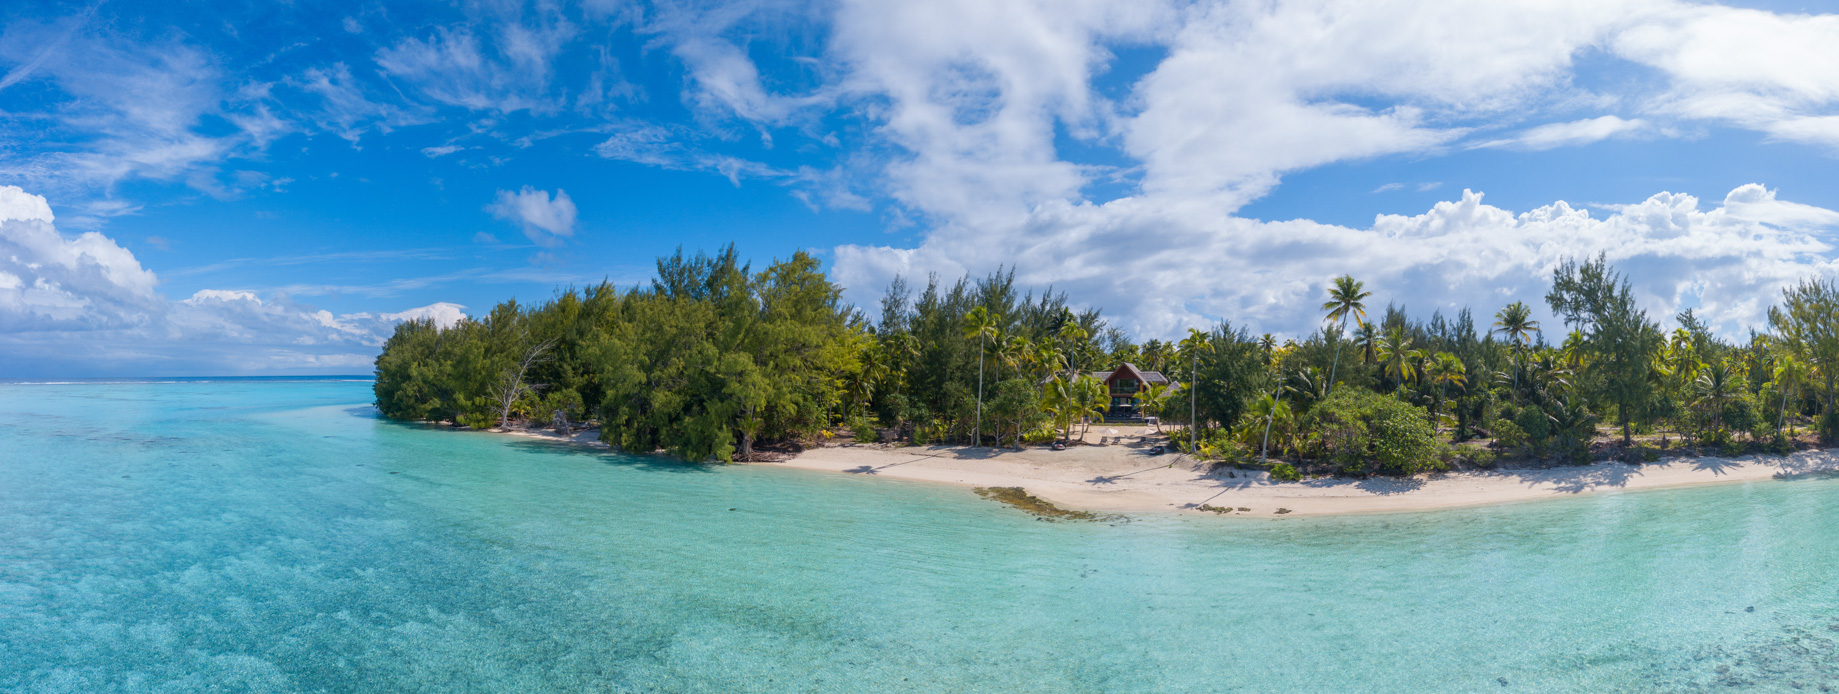 The Brando Resort - Tetiaroa Private Island, French Polynesia - The Brando Residence Ocean View